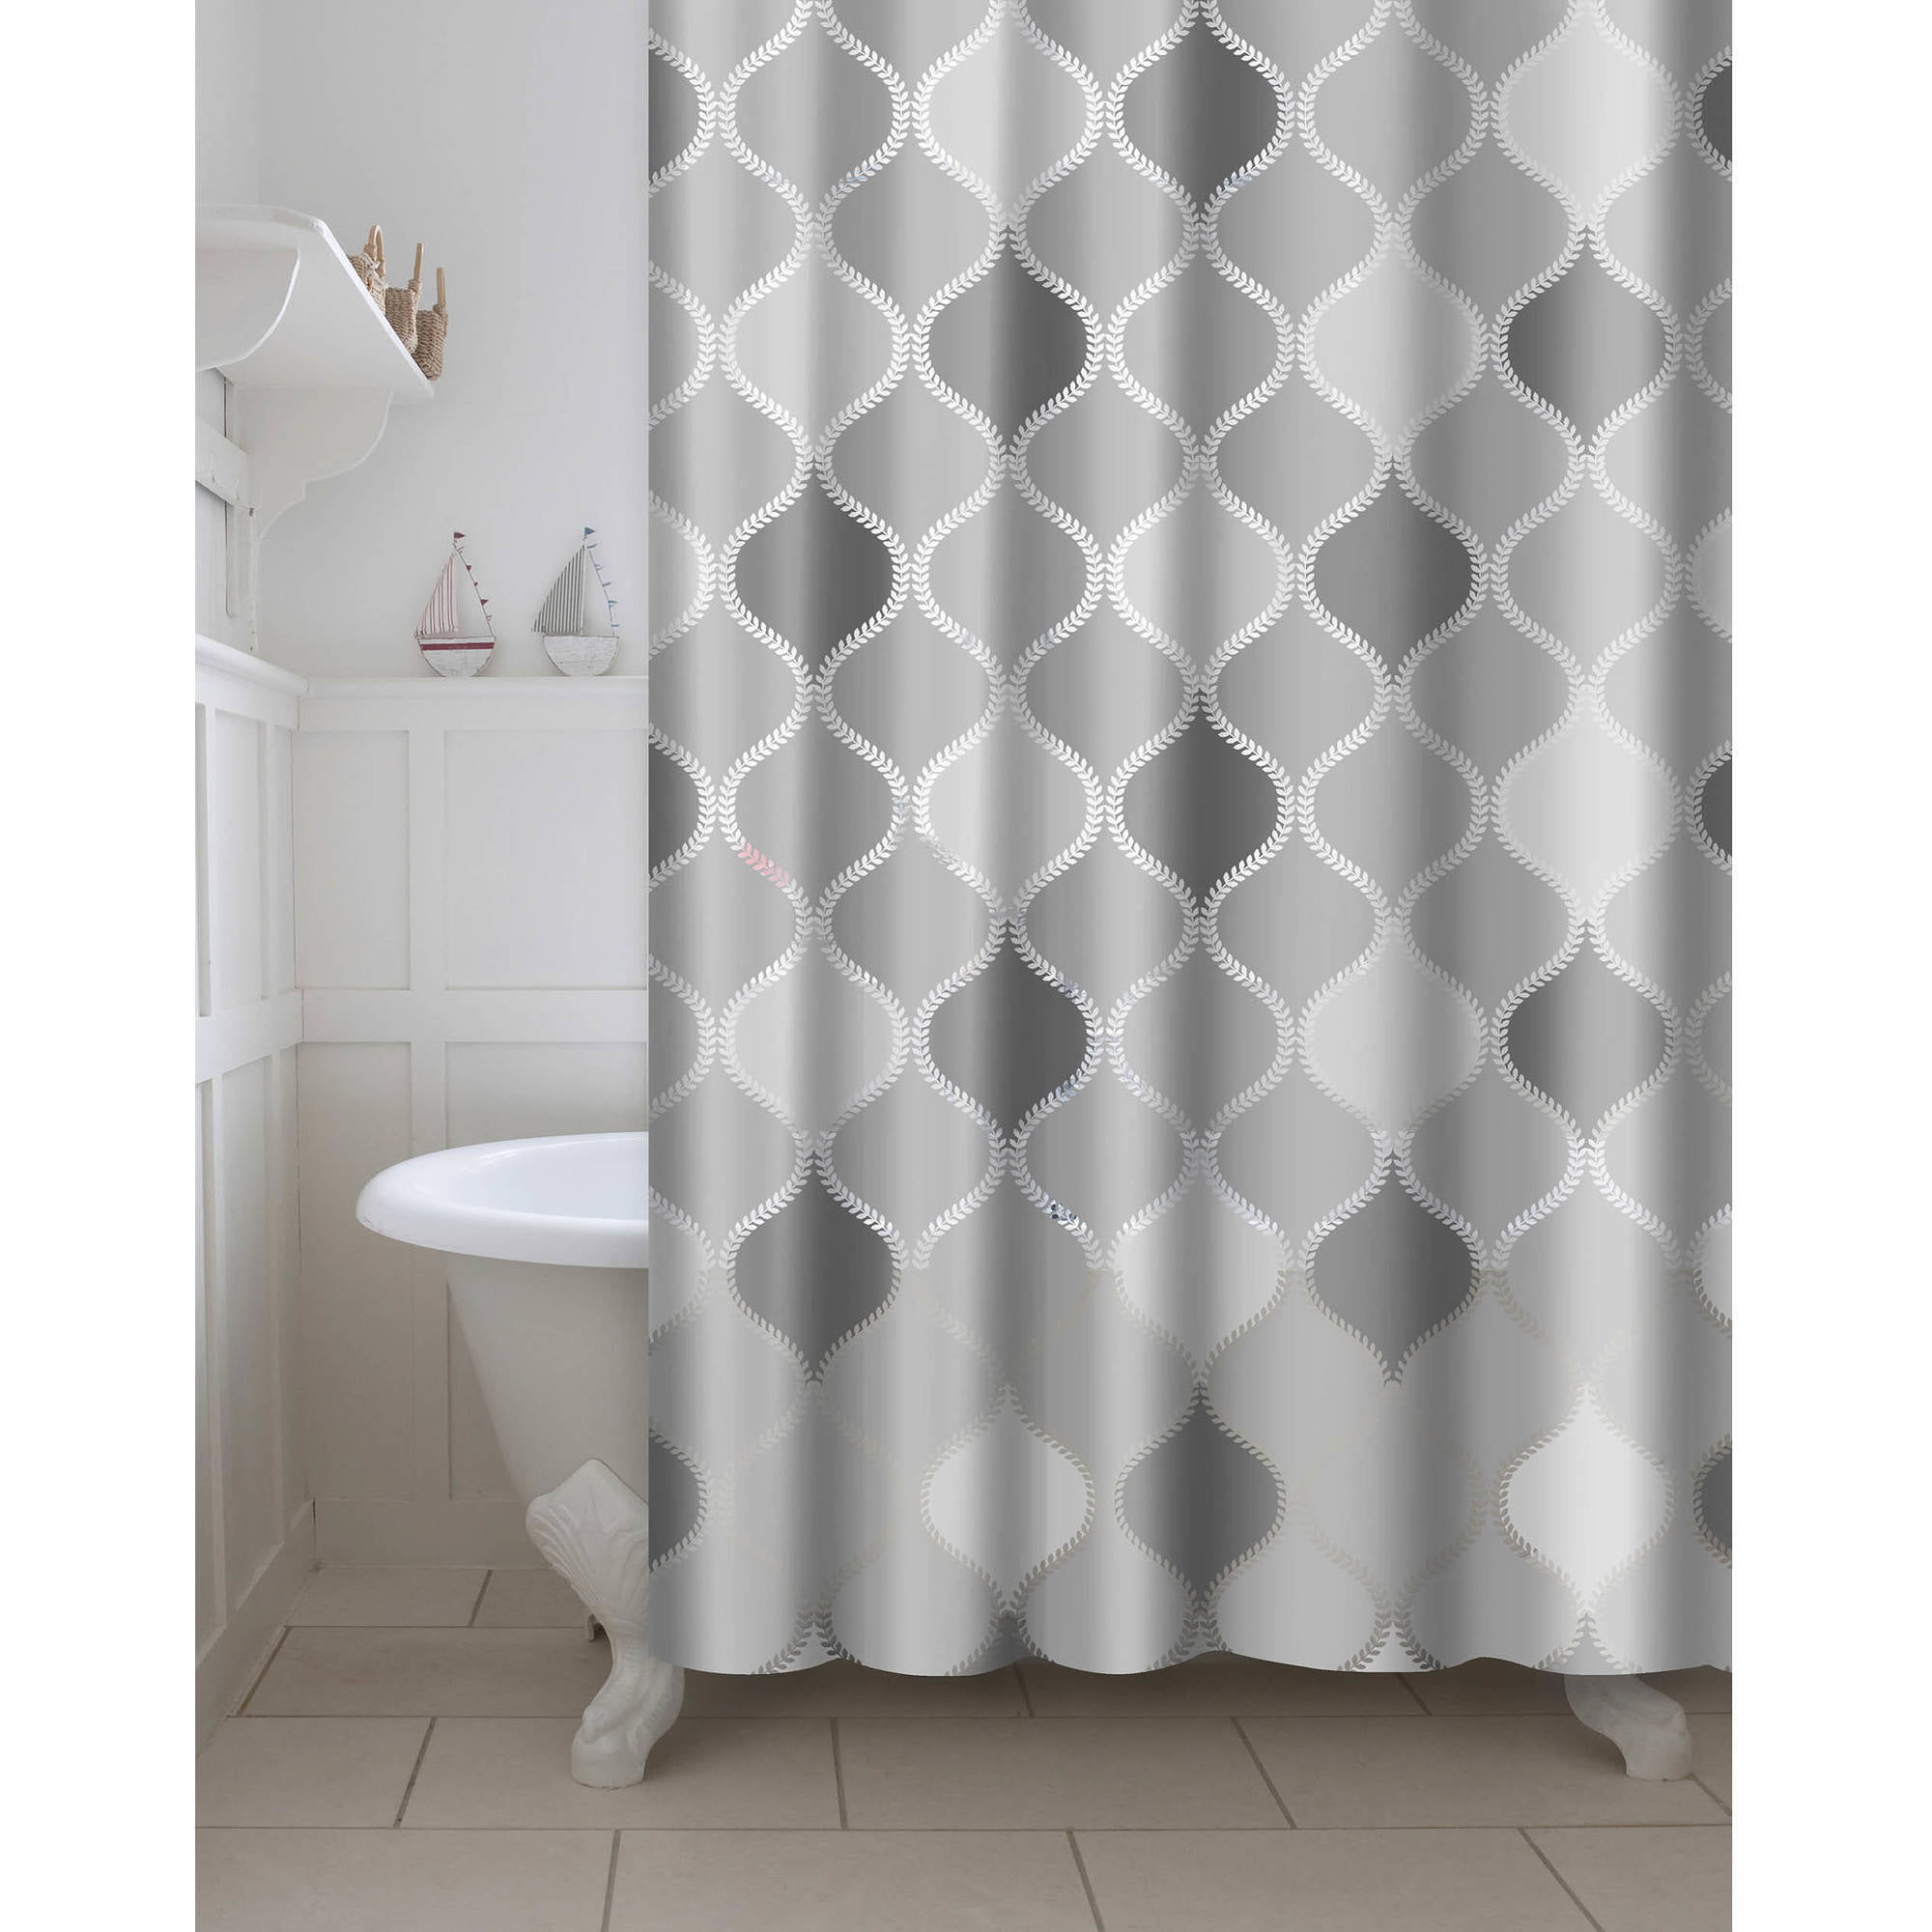 Details about   Modern Waterproof Fabric PEVA EVA PVC Shower Curtain Large Bathroom Home Decors' 